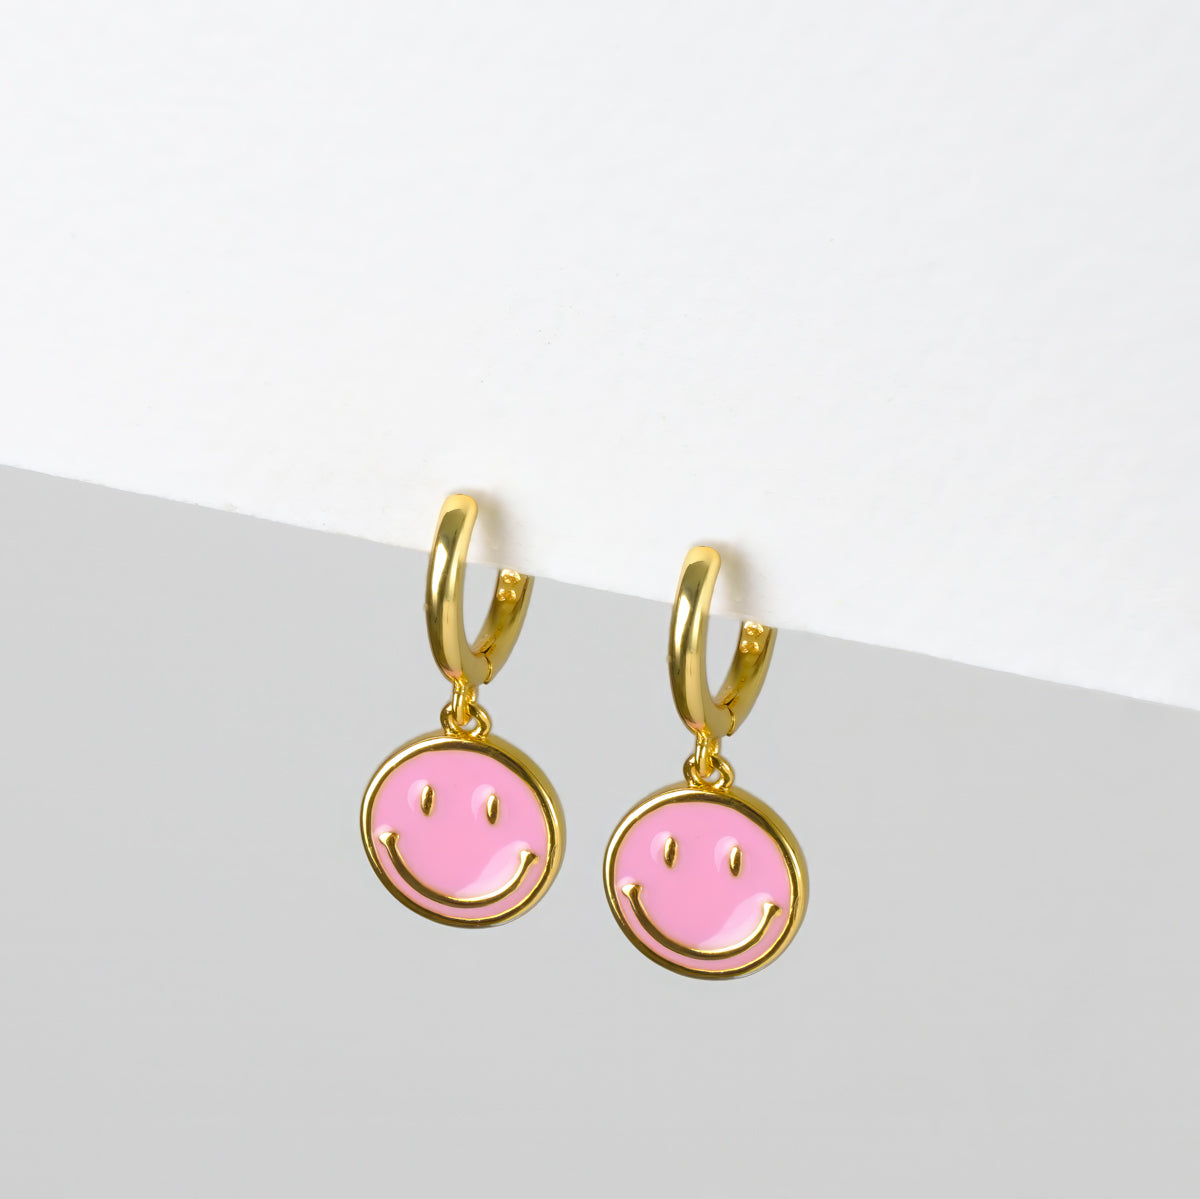 Gold Heart Titanium Huggie Earrings– Simply Whispers